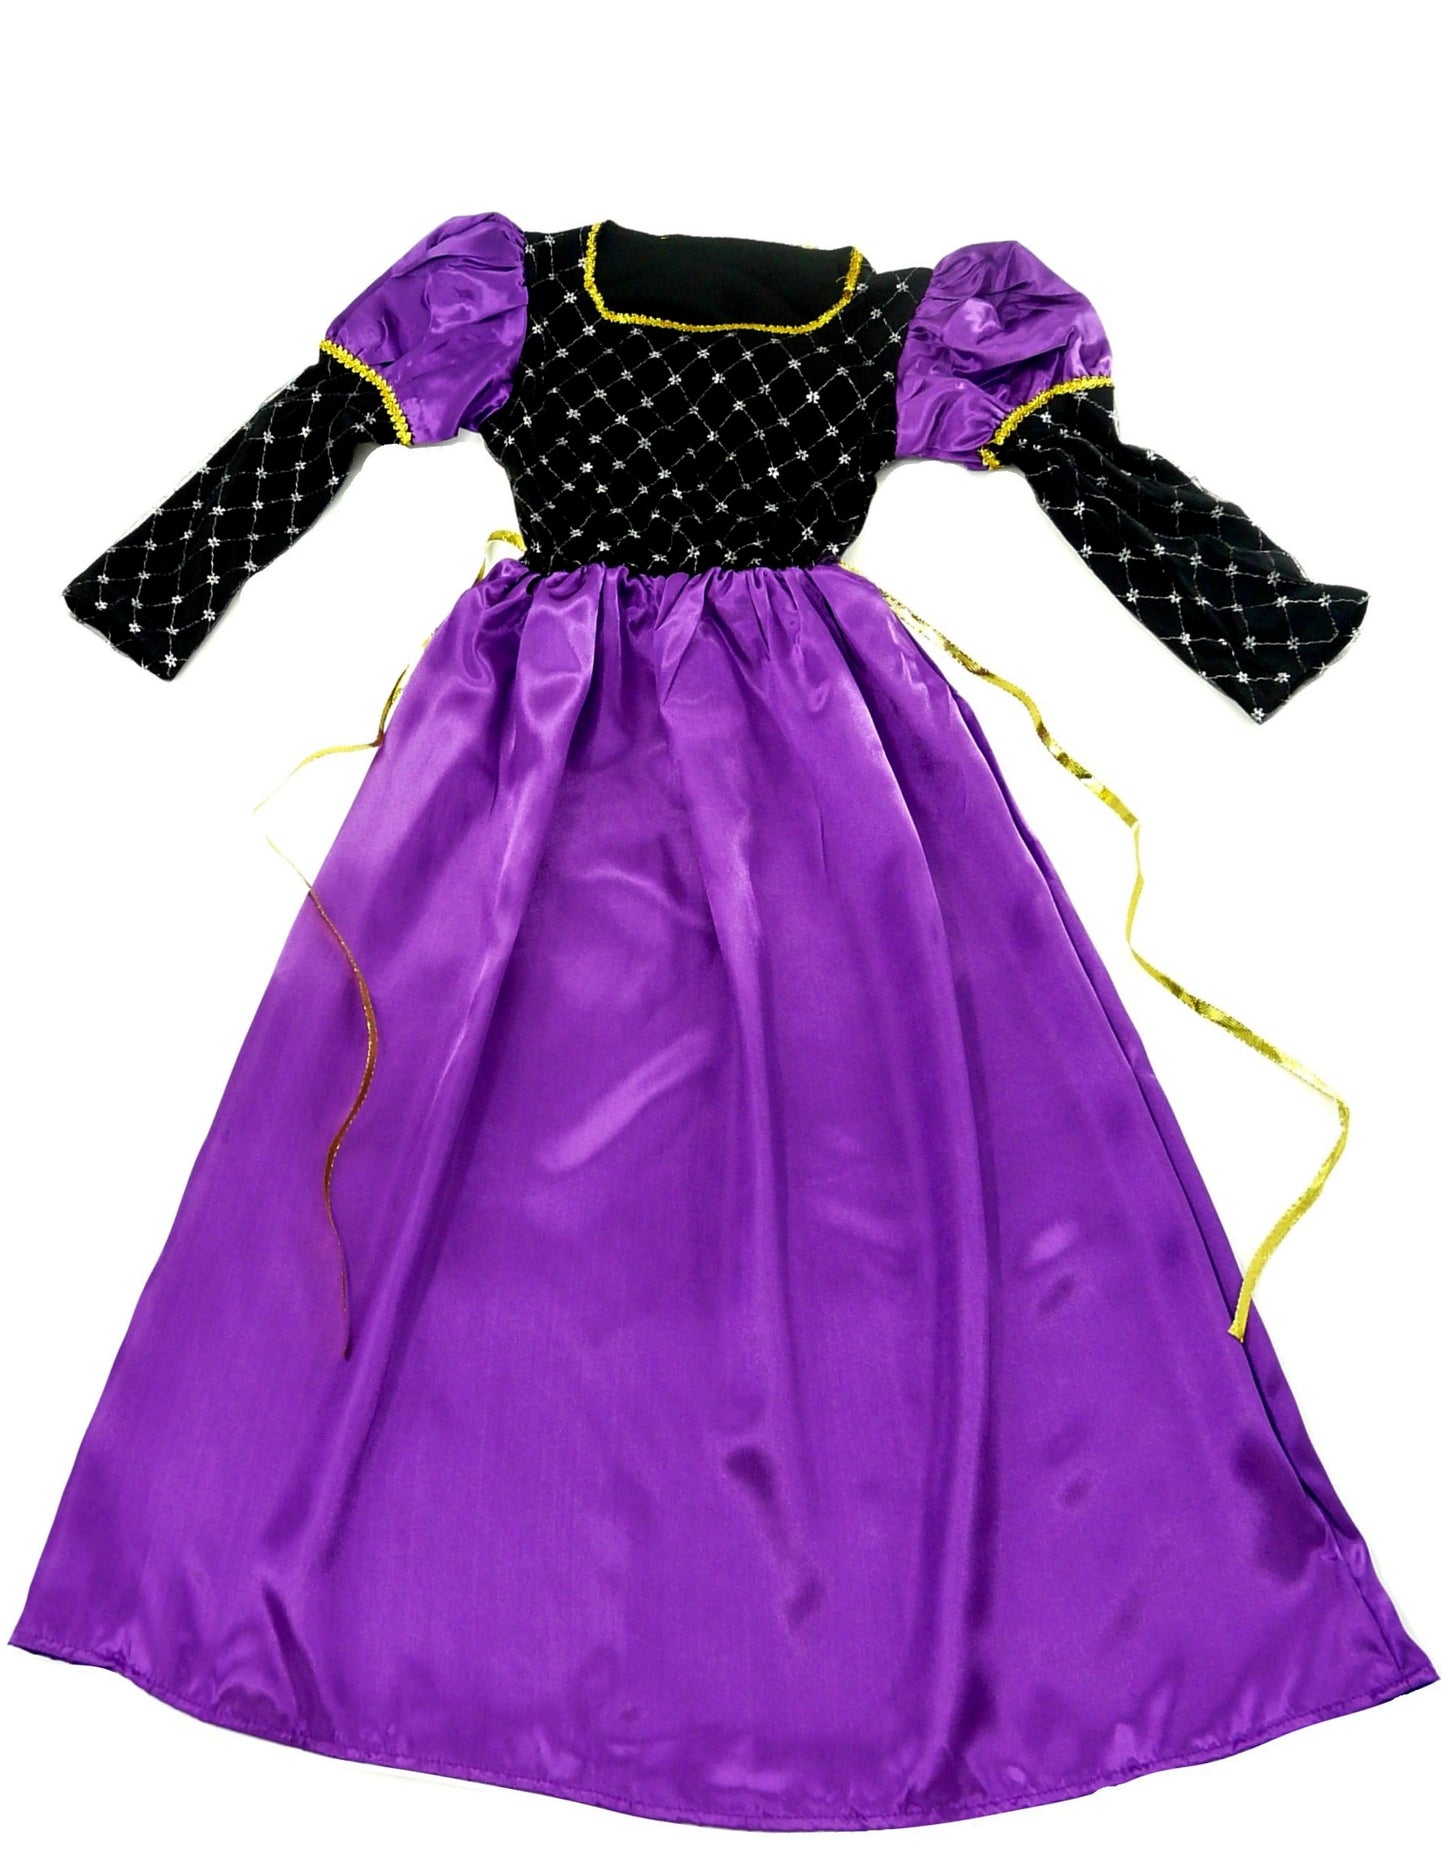 Girls Purple Renaissance Fancy Dress Costume Age 4-6